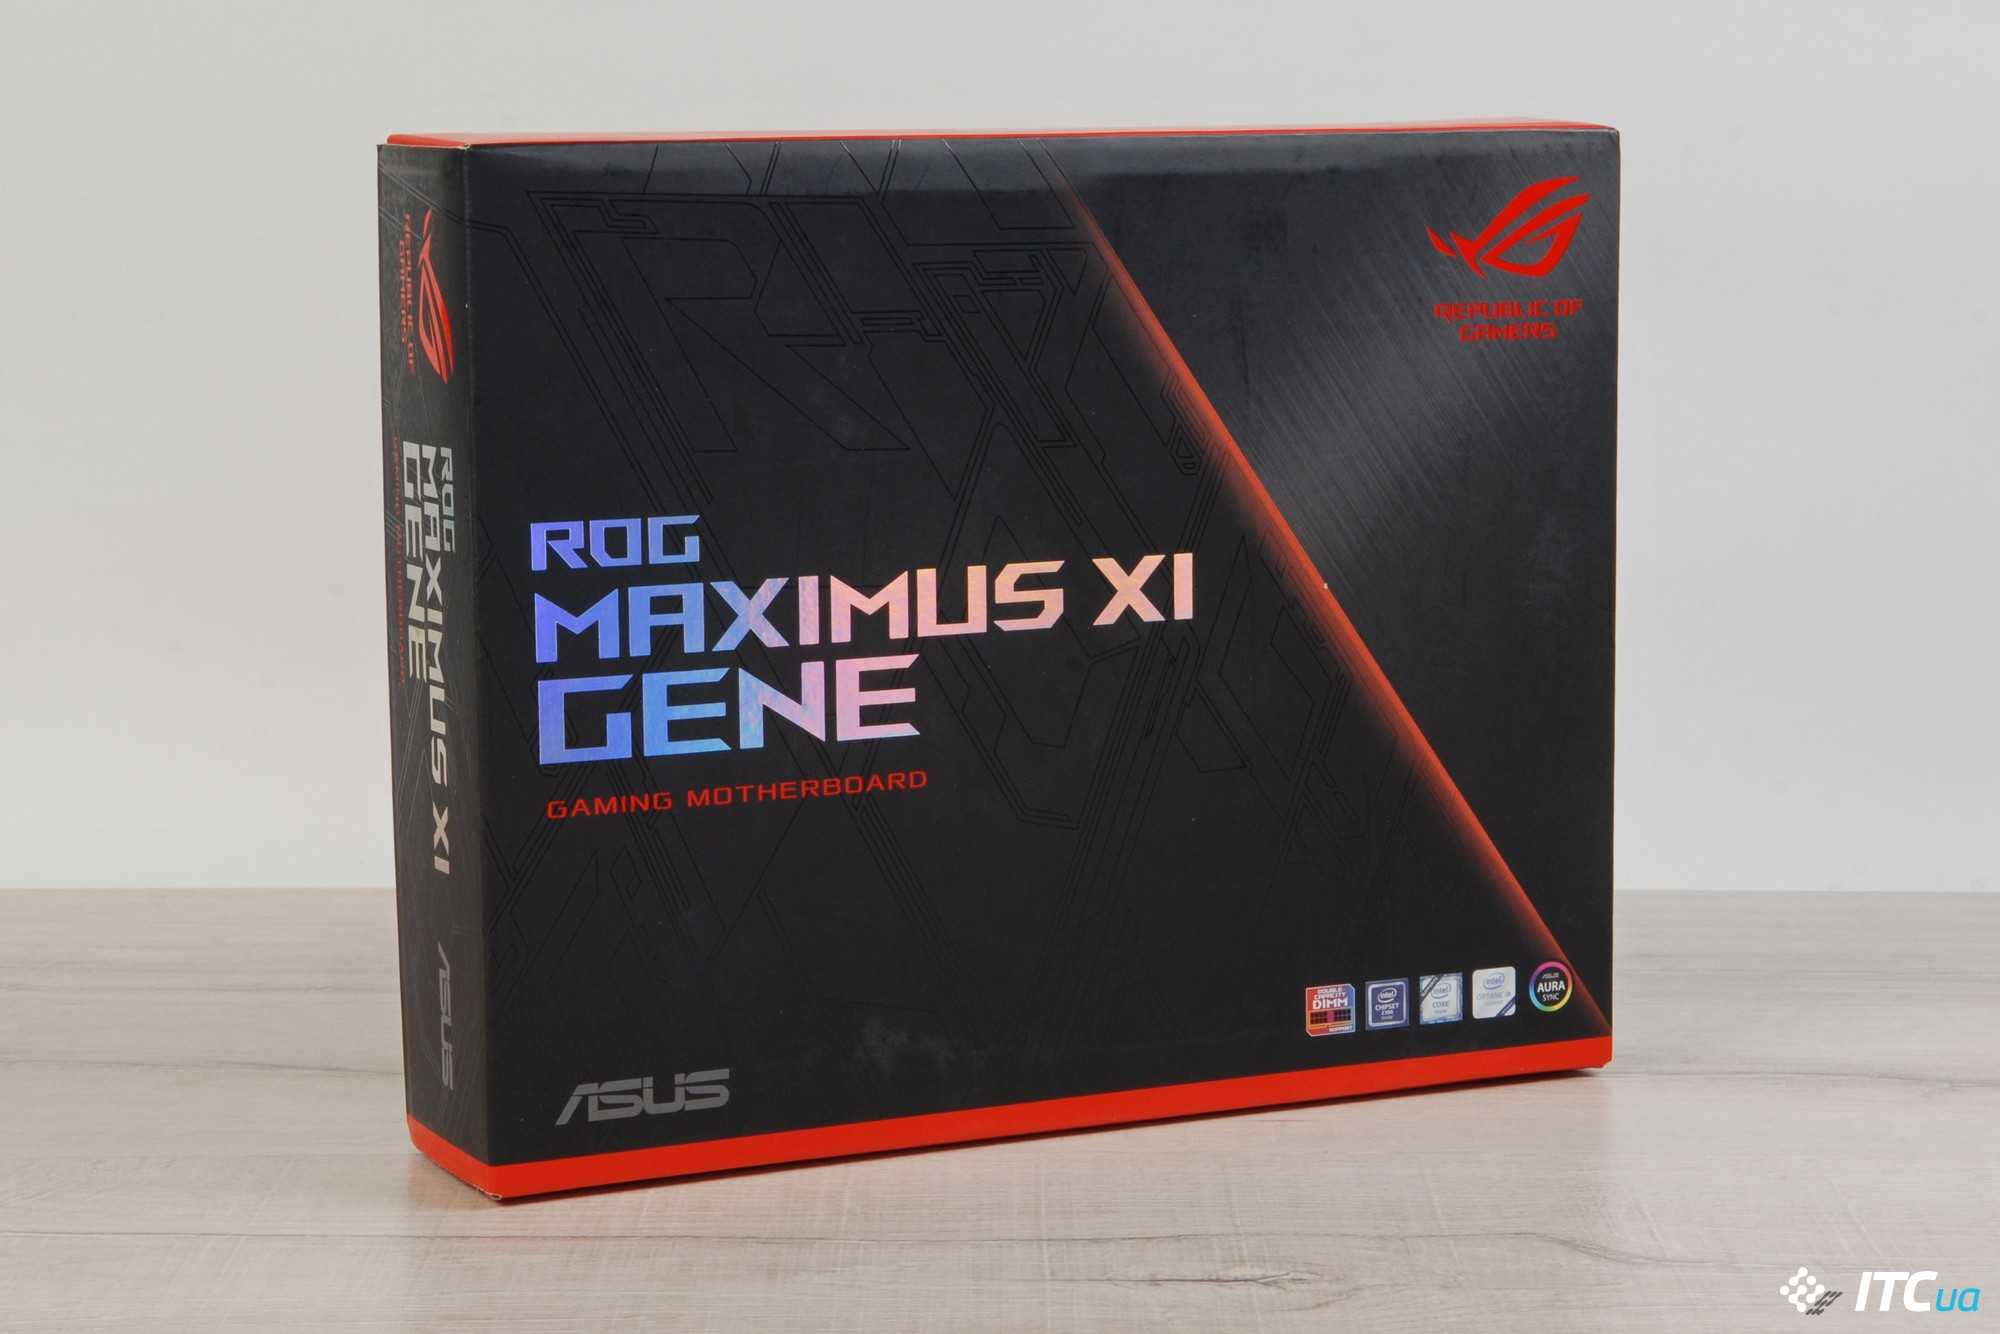 Asus rog maximus xi hero (wi-fi) and rog strix z390-e gaming motherboard review